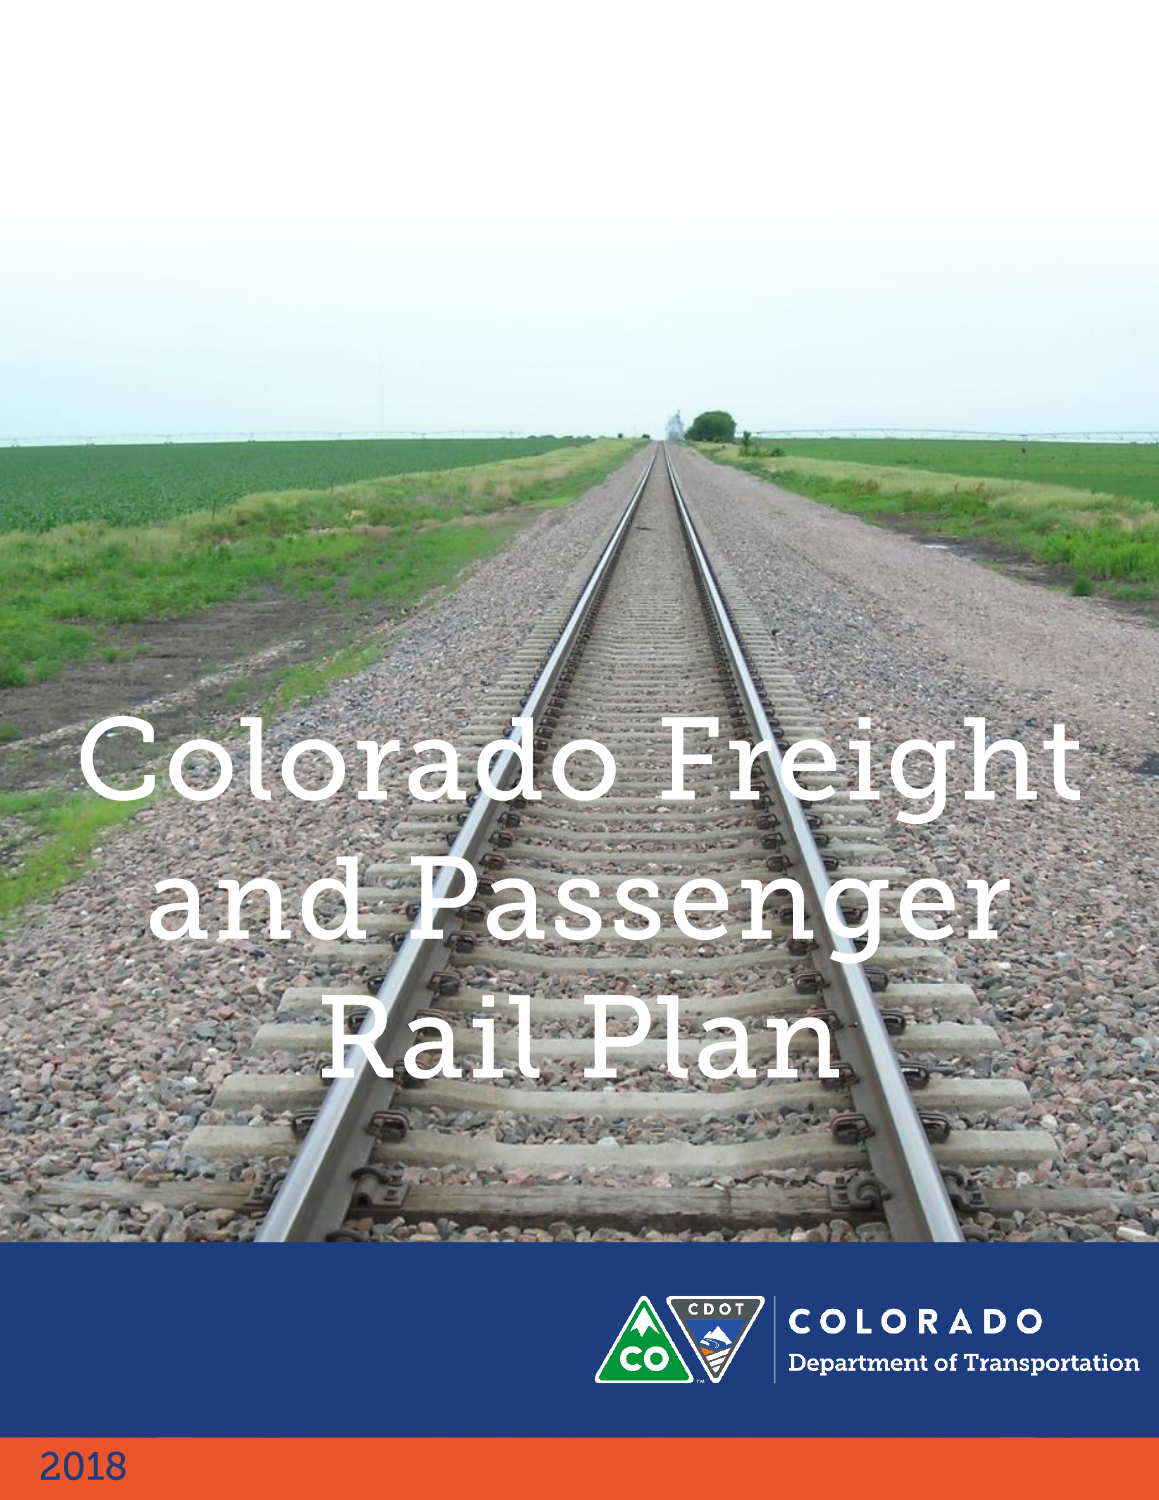 2018 Colorado State Freight and Passenger Rail Plan_Final-1.jpg detail image